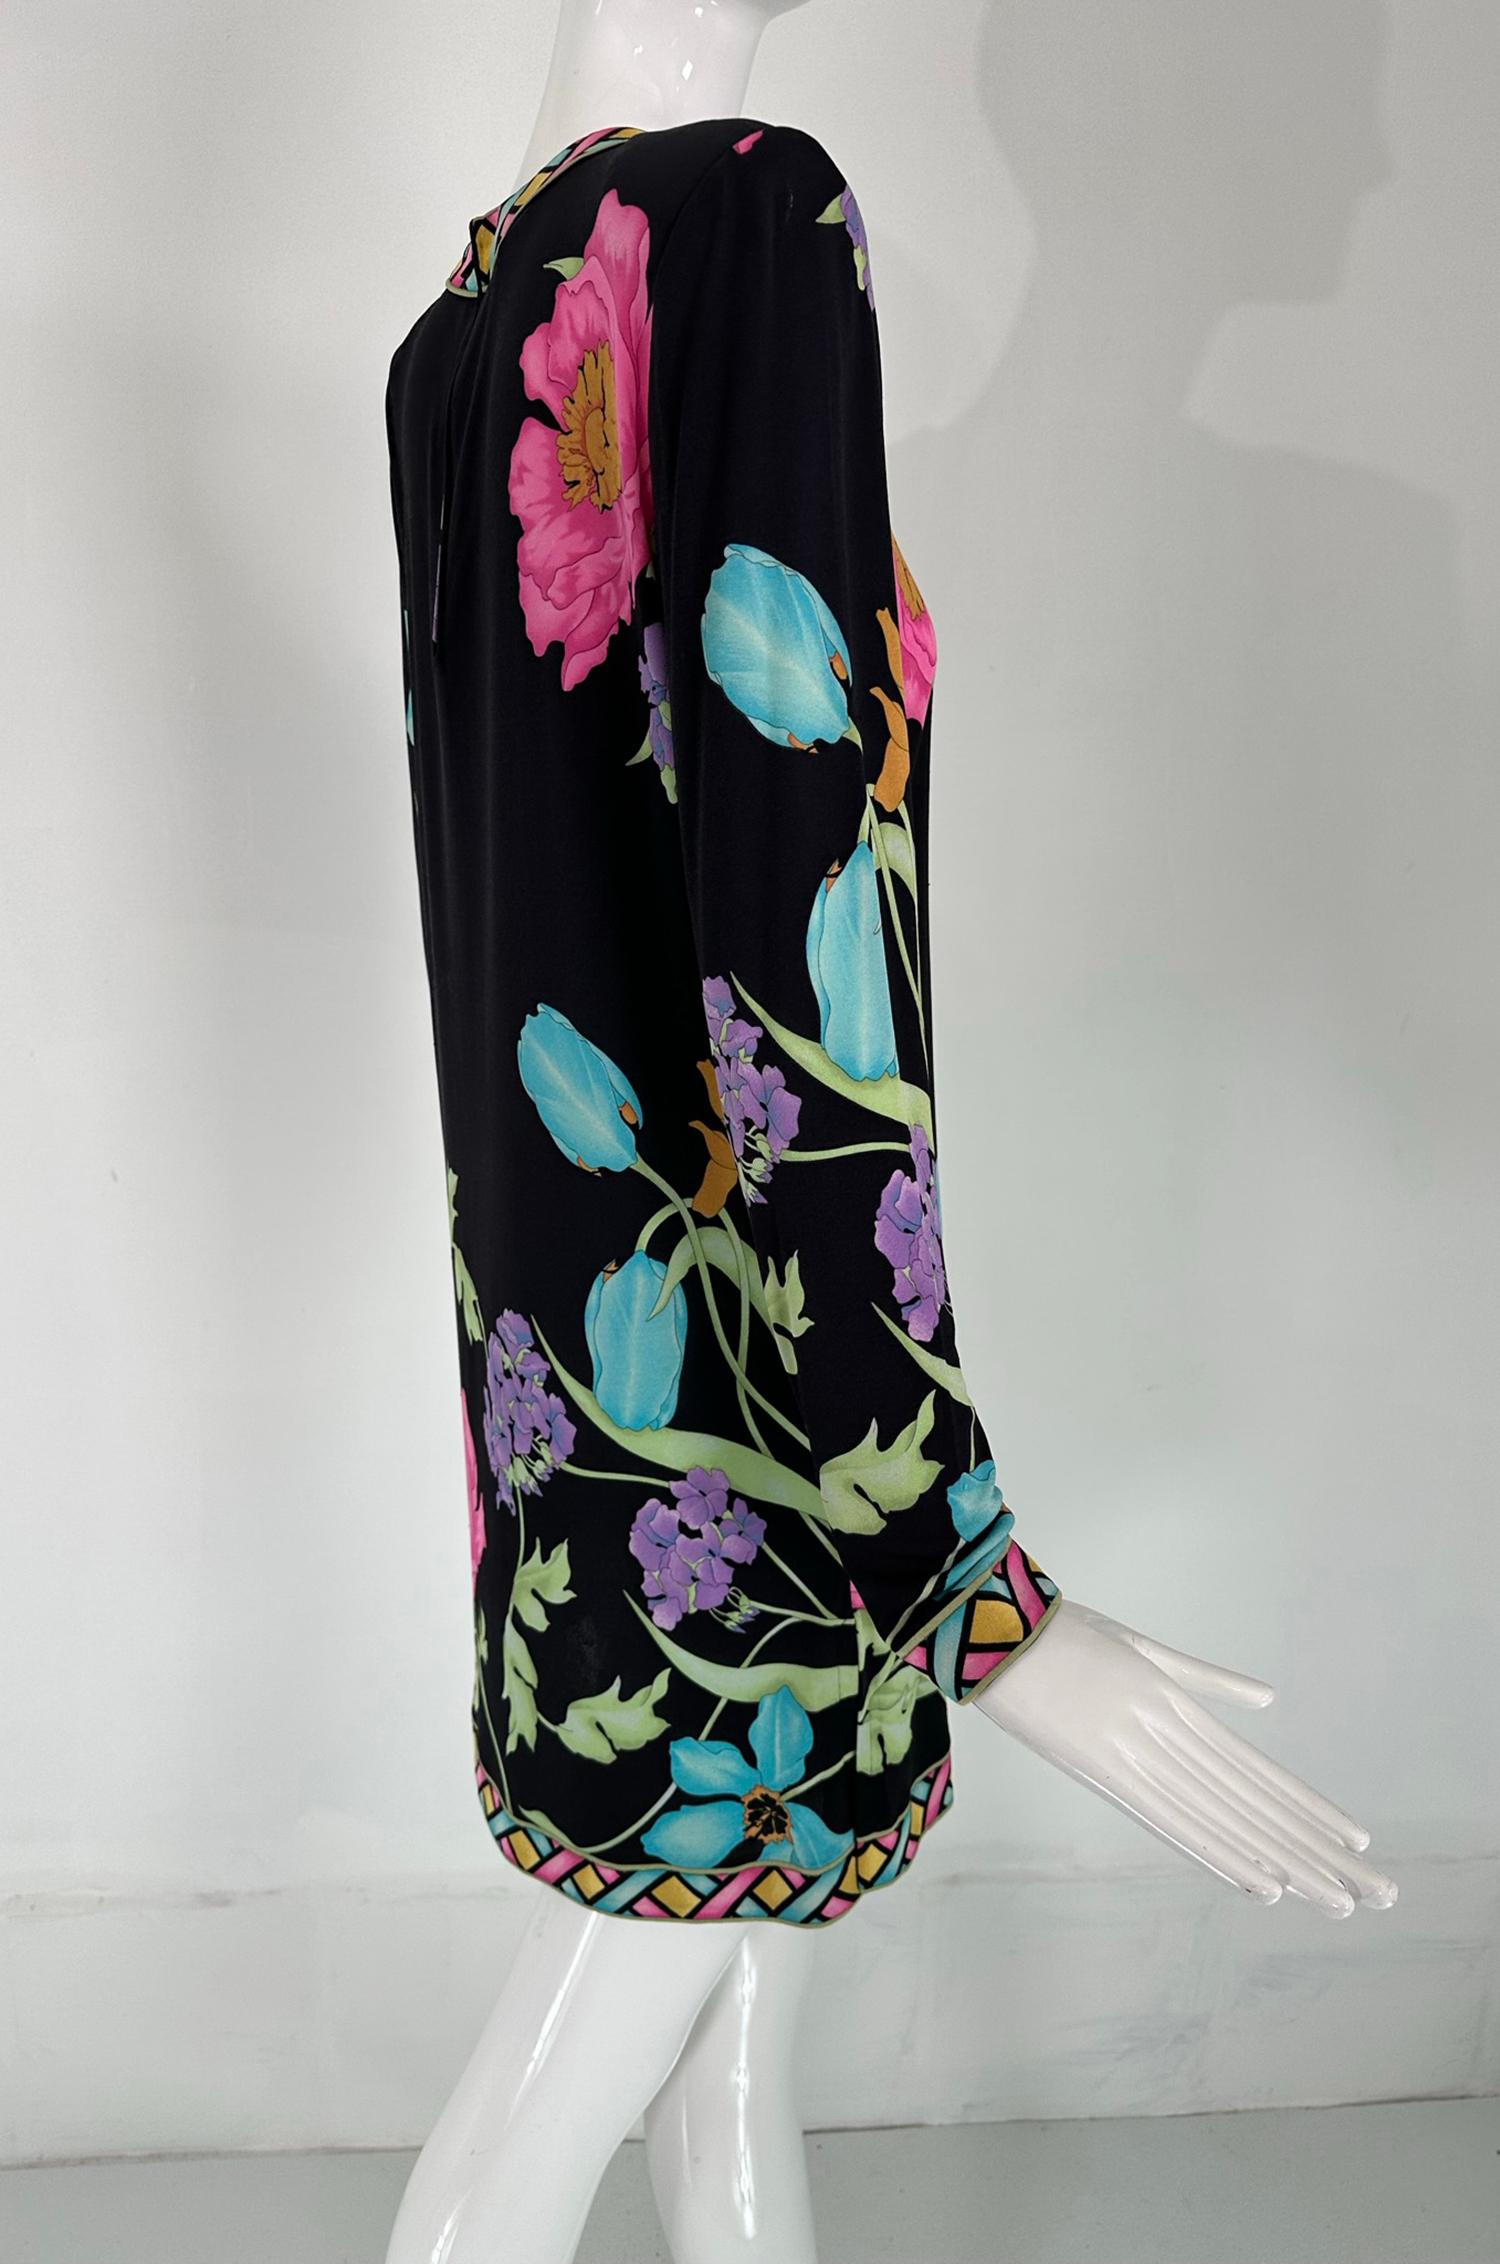 Averaro Bessi Spectacular Silk Vibrant Floral Tunic Dress 12  For Sale 1